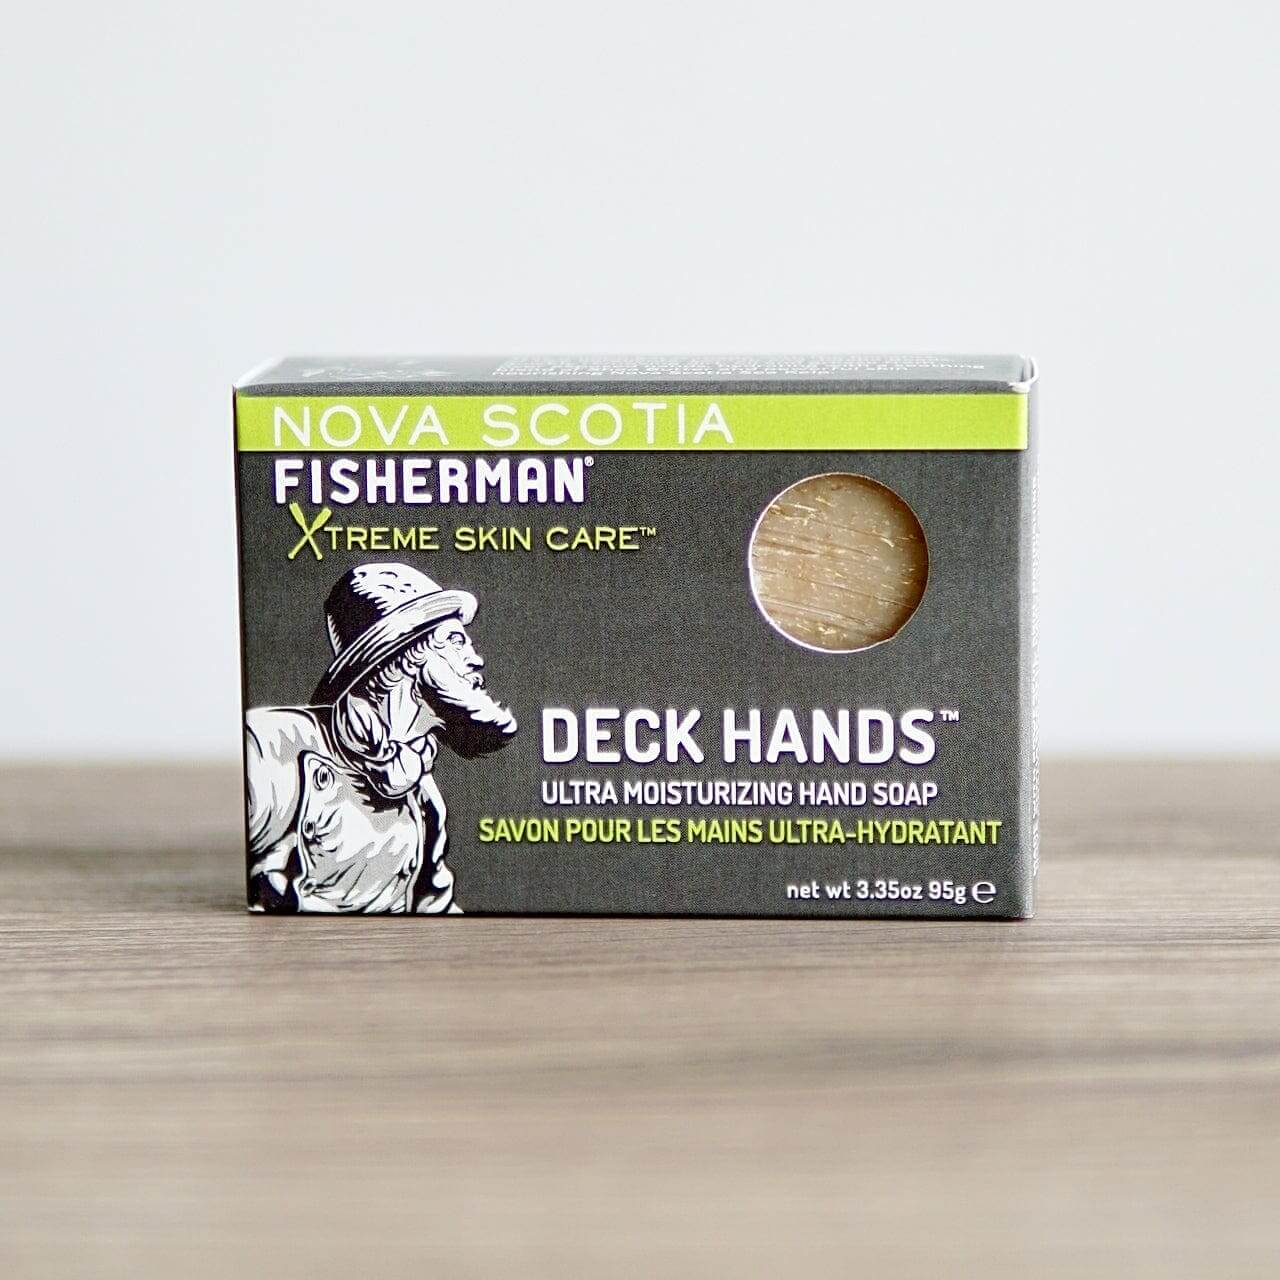 Nova Scotia Fisherman Soap Nova Scotia Fisherman, Soap Bar - Deck Hands